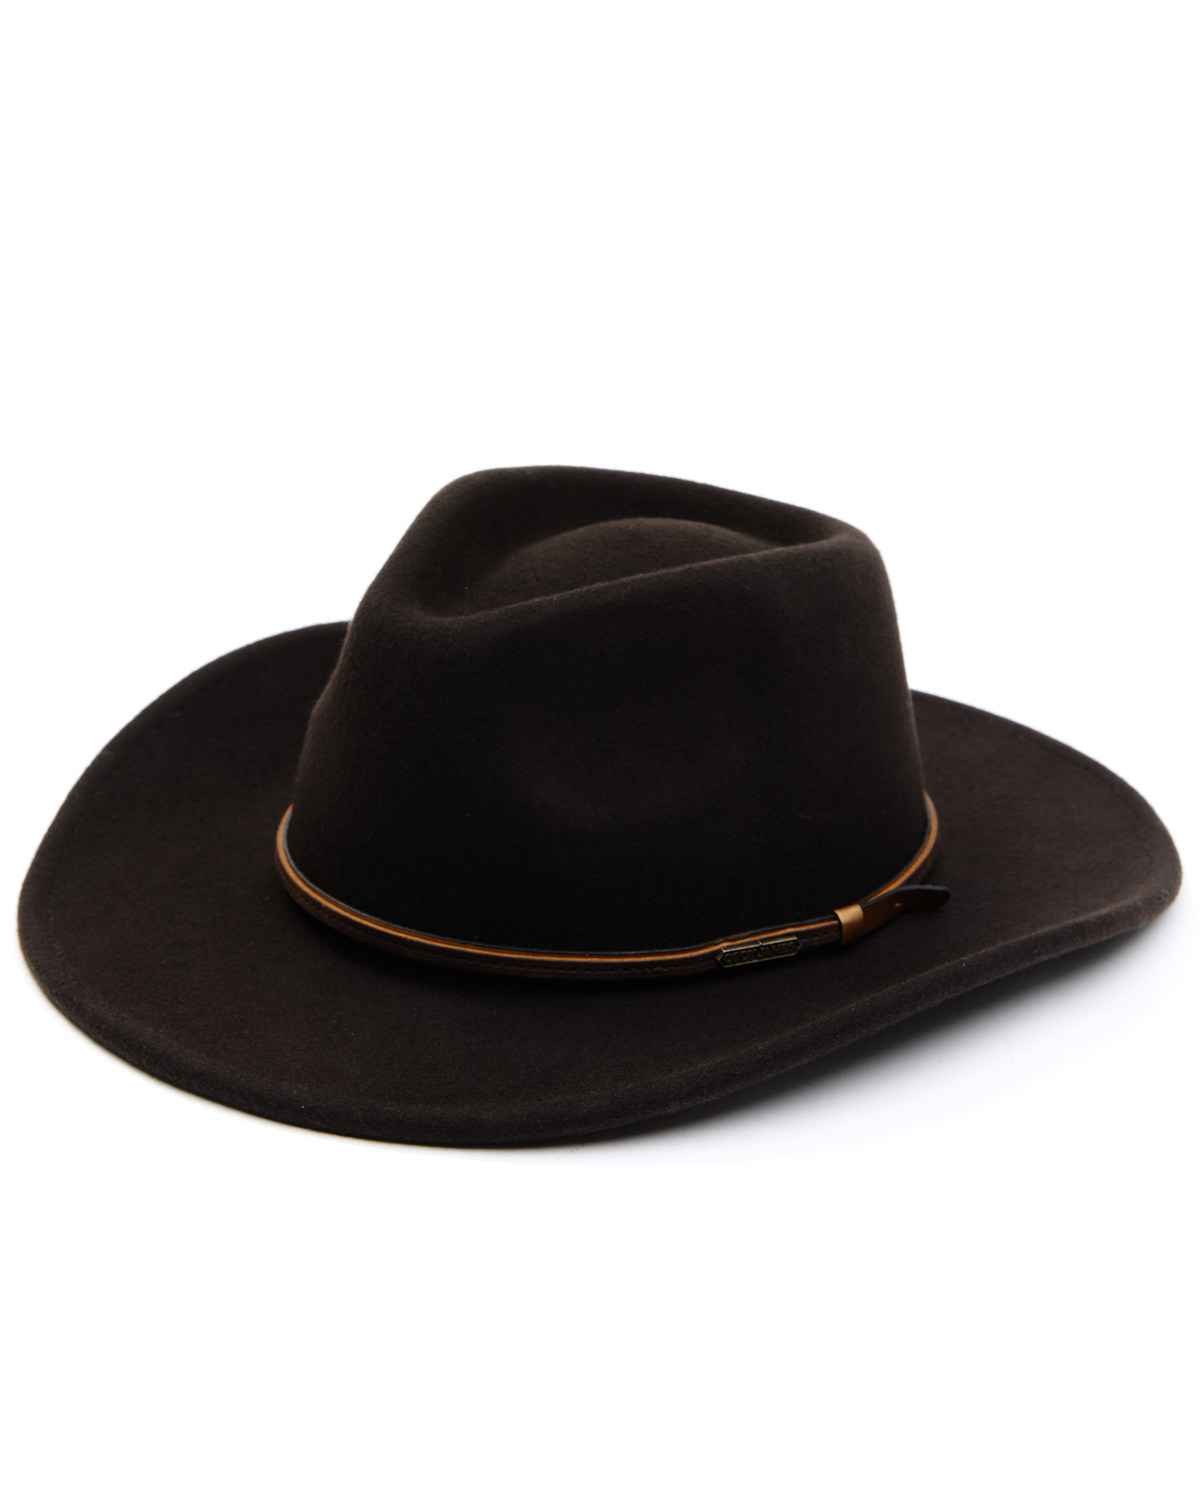 Cody James Men's Felt Western Fashion Hat